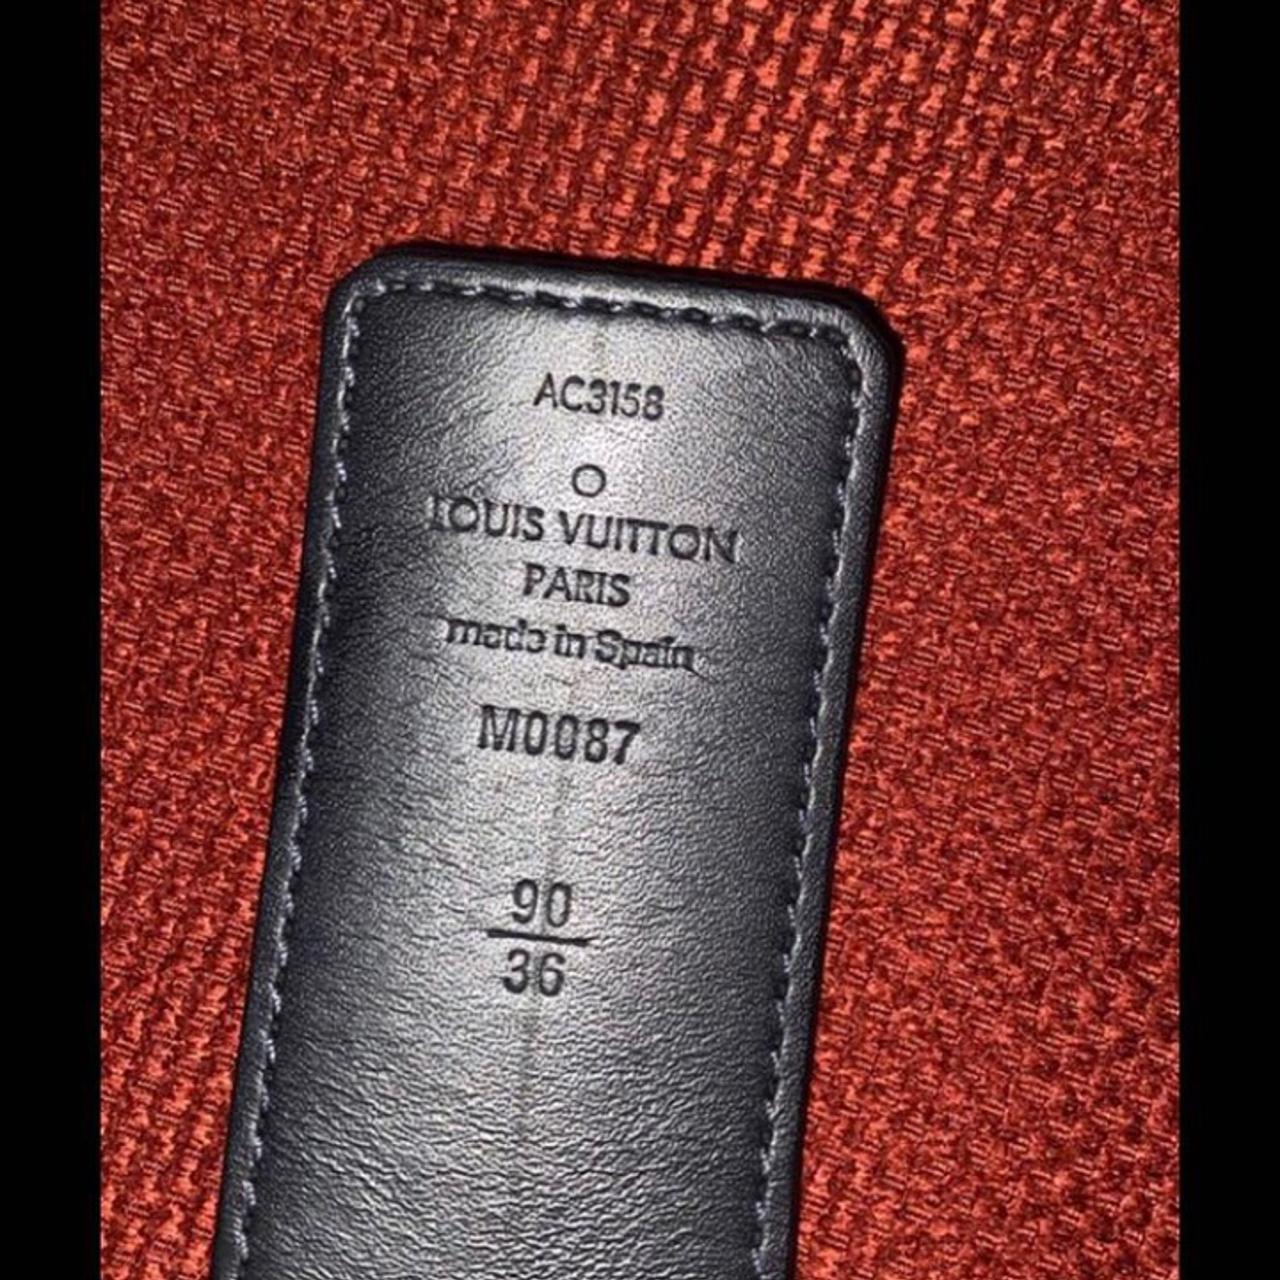 Louis Vuitton belt size 32 #louisvuitton #lv - Depop